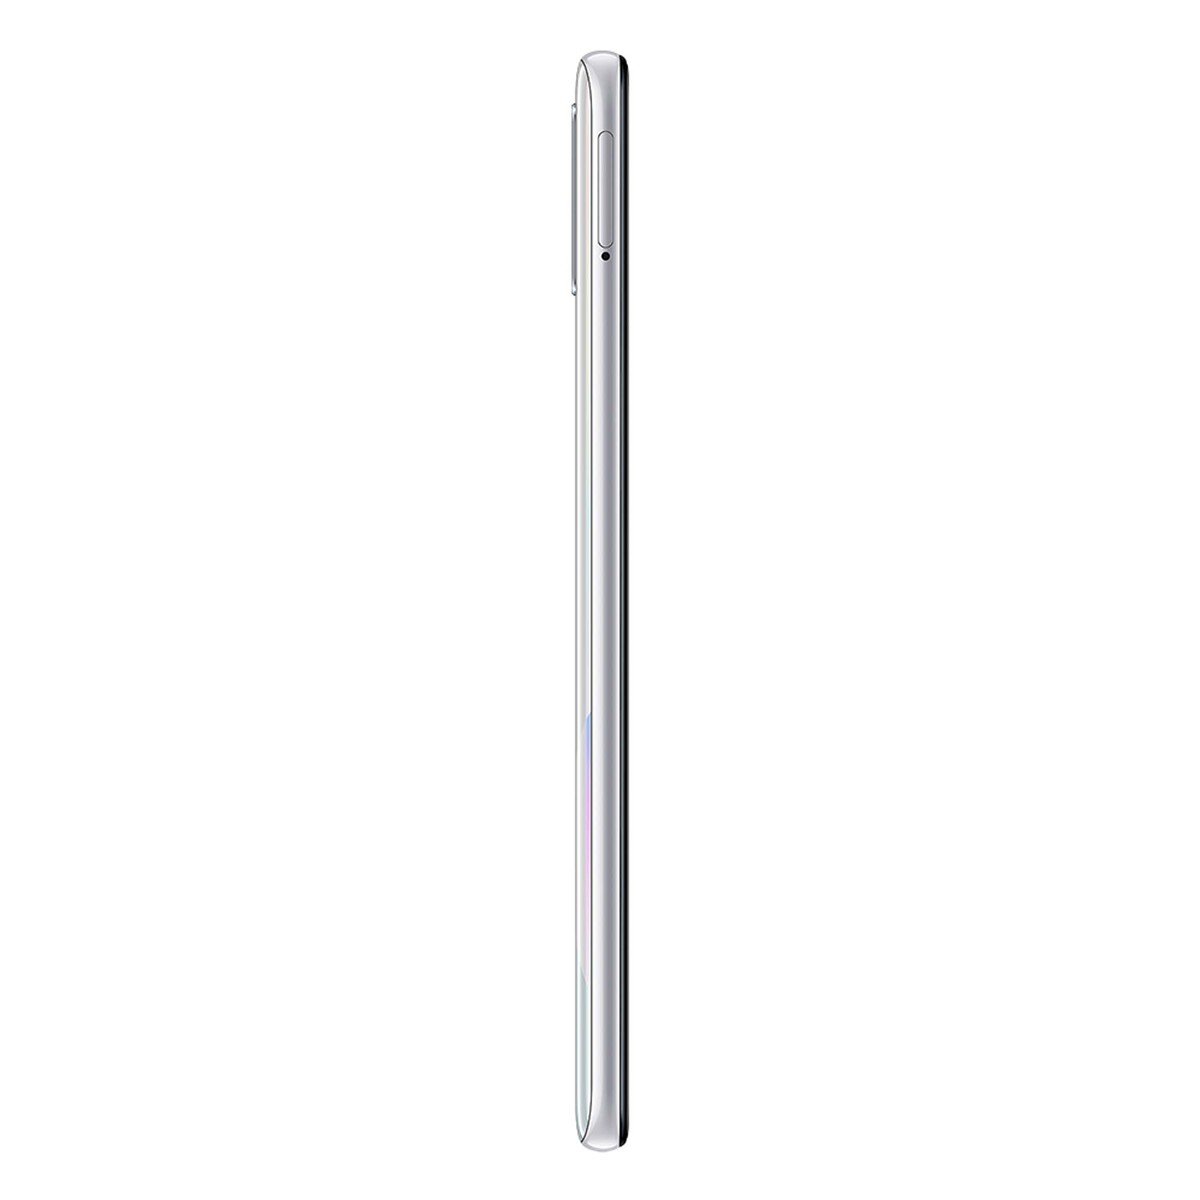 Samsung Galaxy A30s SMA307 128GB White